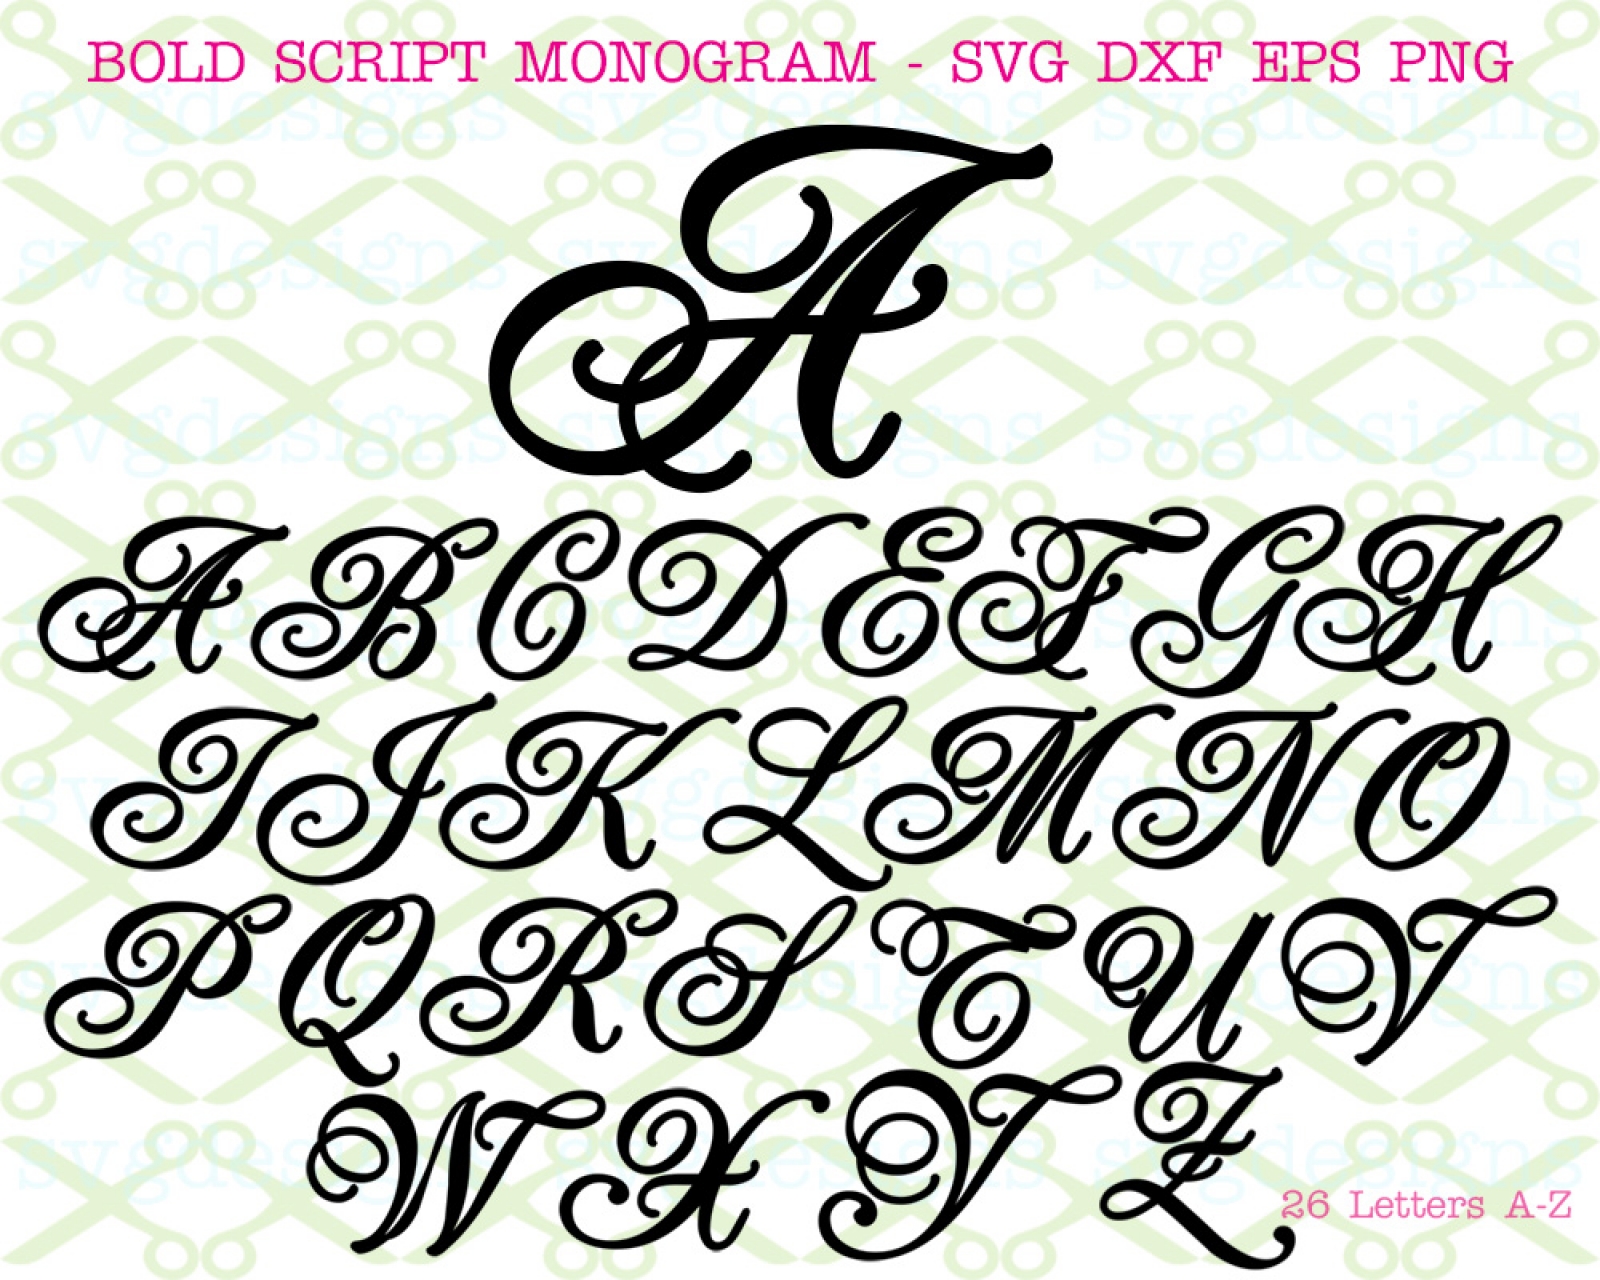 Bold Font Bold Letters Font Bold Monogram Font Block Font Bold Style Font  Block Bold Font Bold Script Font Alphabet Blocks Font Cricut Font 